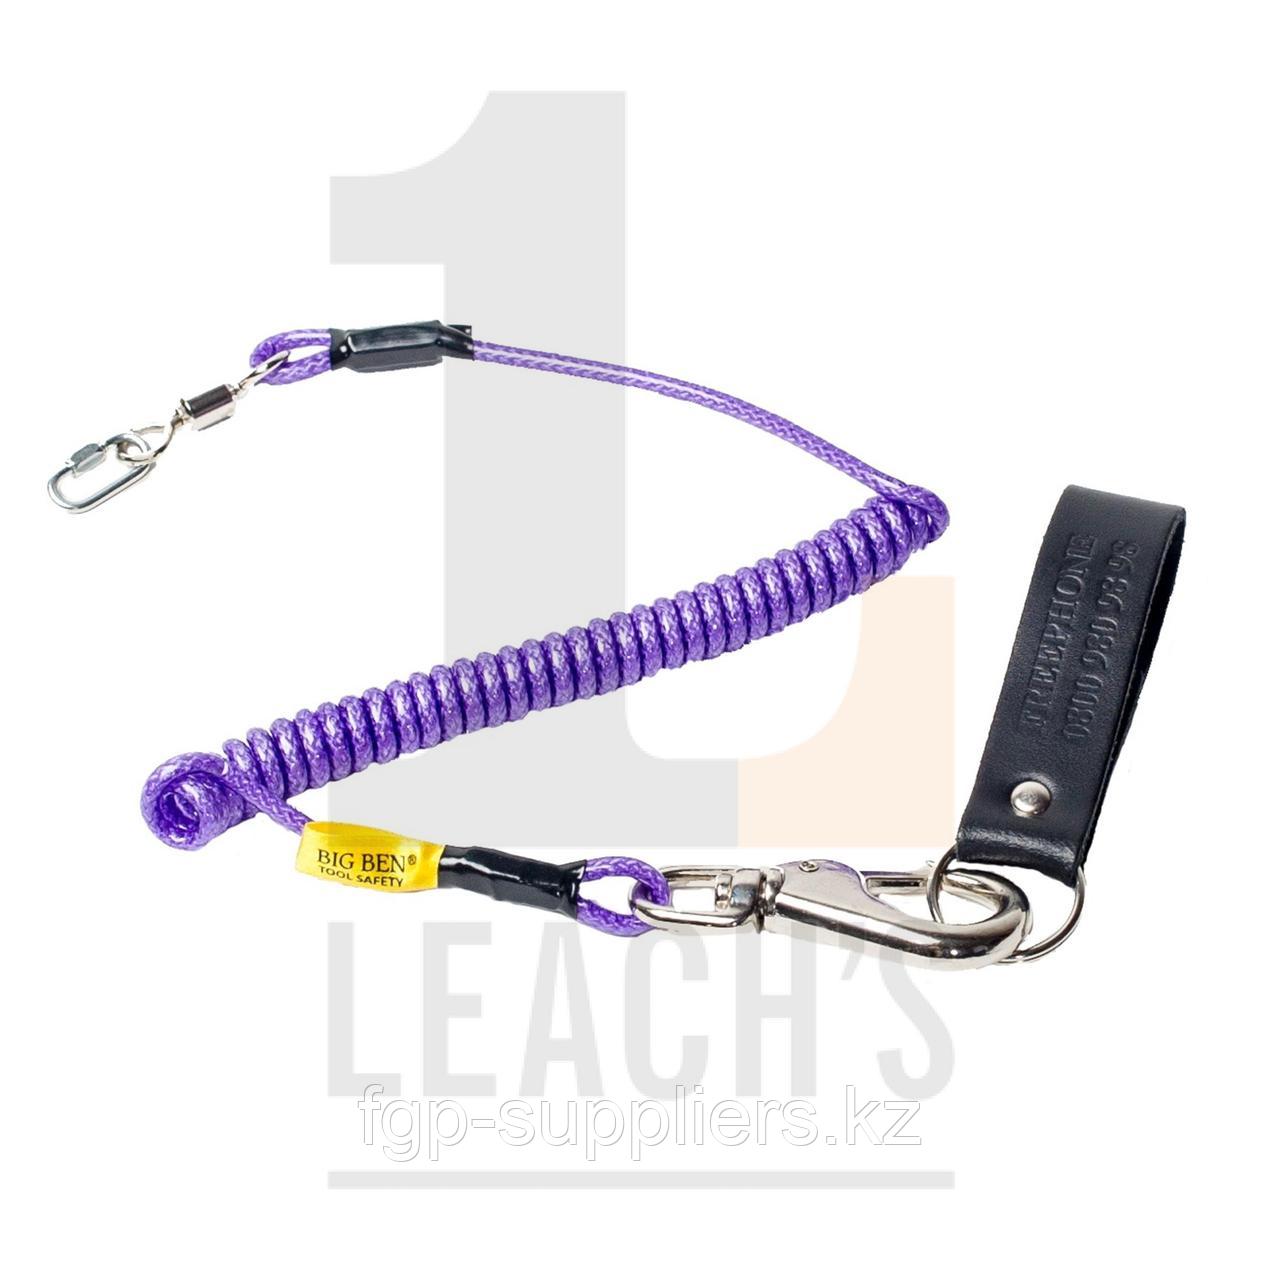 Tool Safety Rope with Spring Hook, Extra Heavy Duty Swivel & Leather Belt Loop / Шнур держатель инструментов с карабином с вертлюгом, со сверхмощным